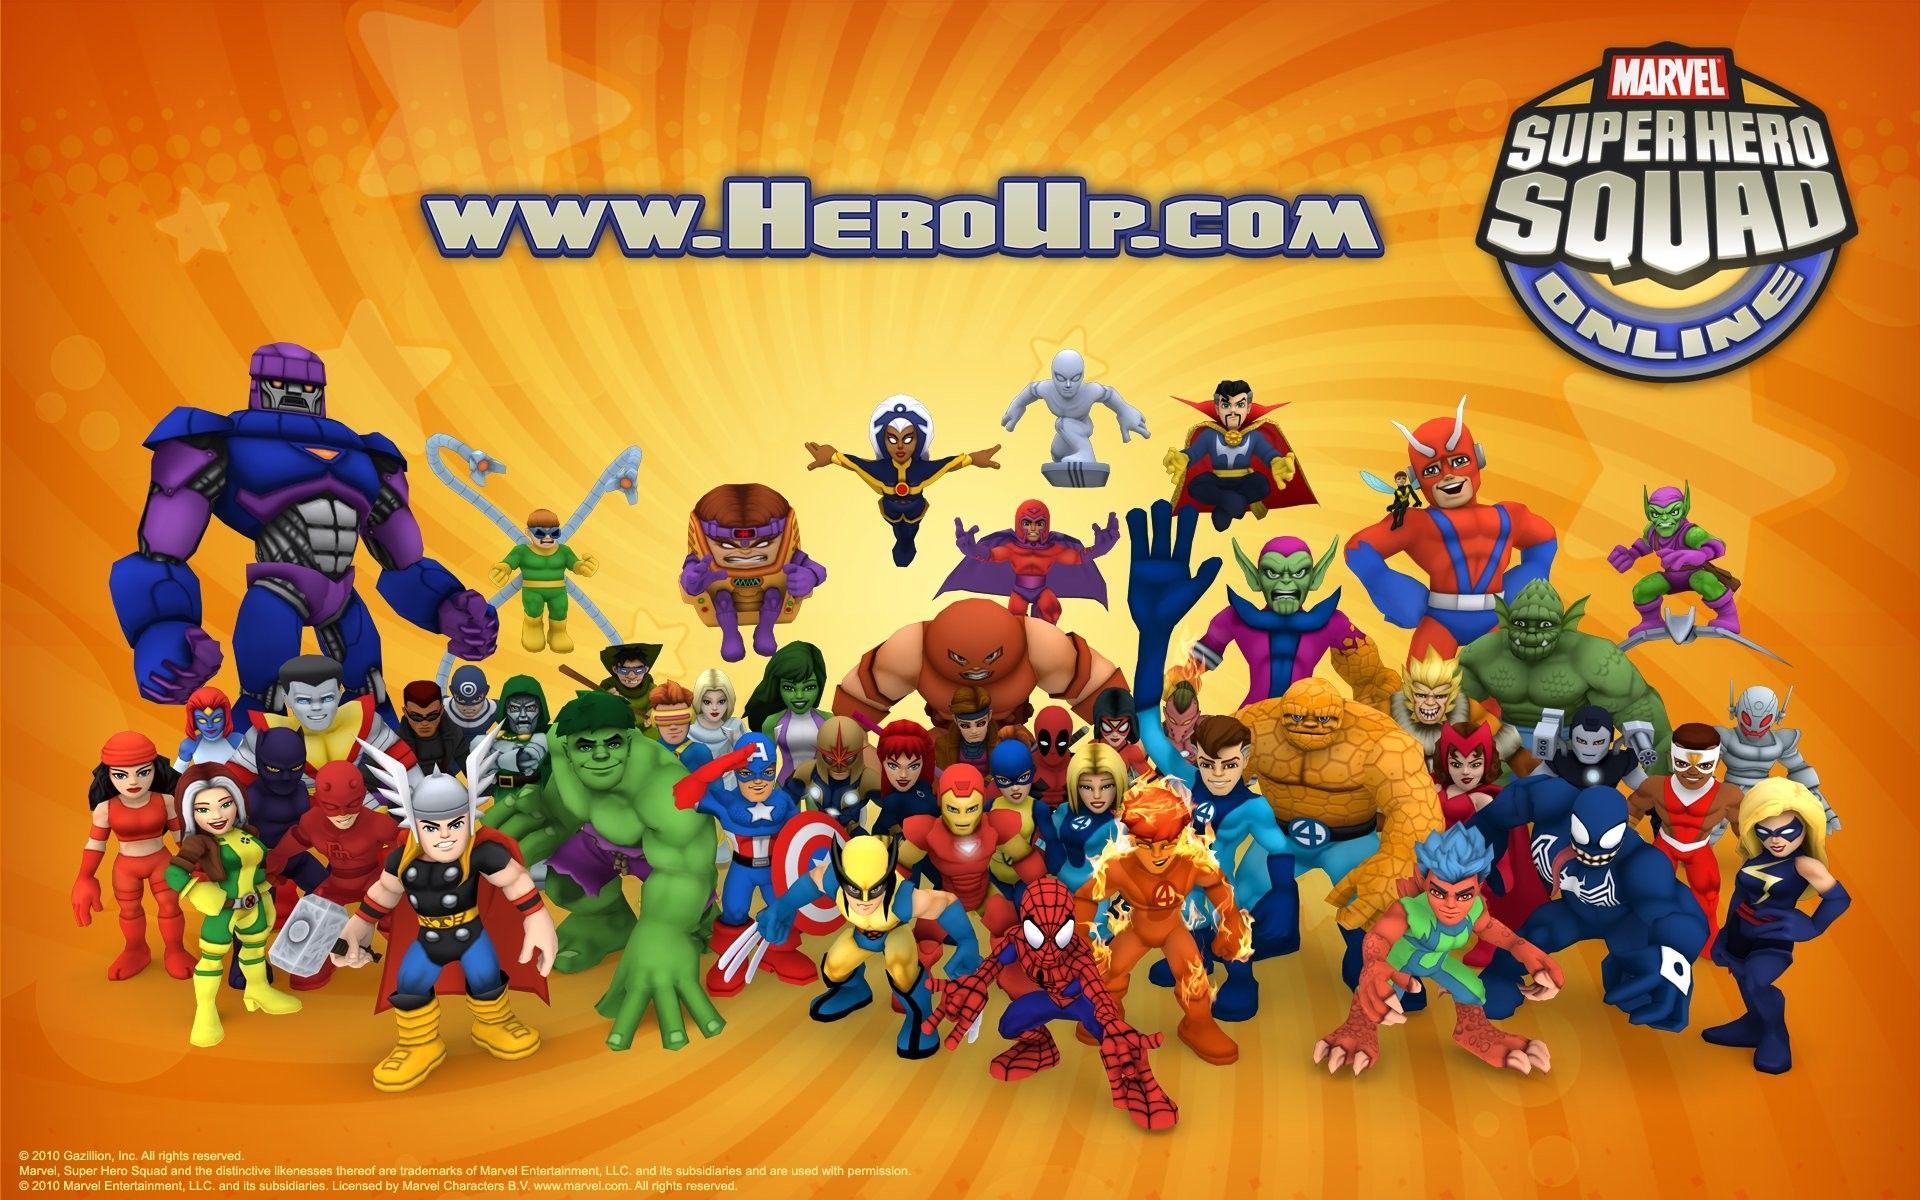 Super Hero Squad Wallpaper background picture